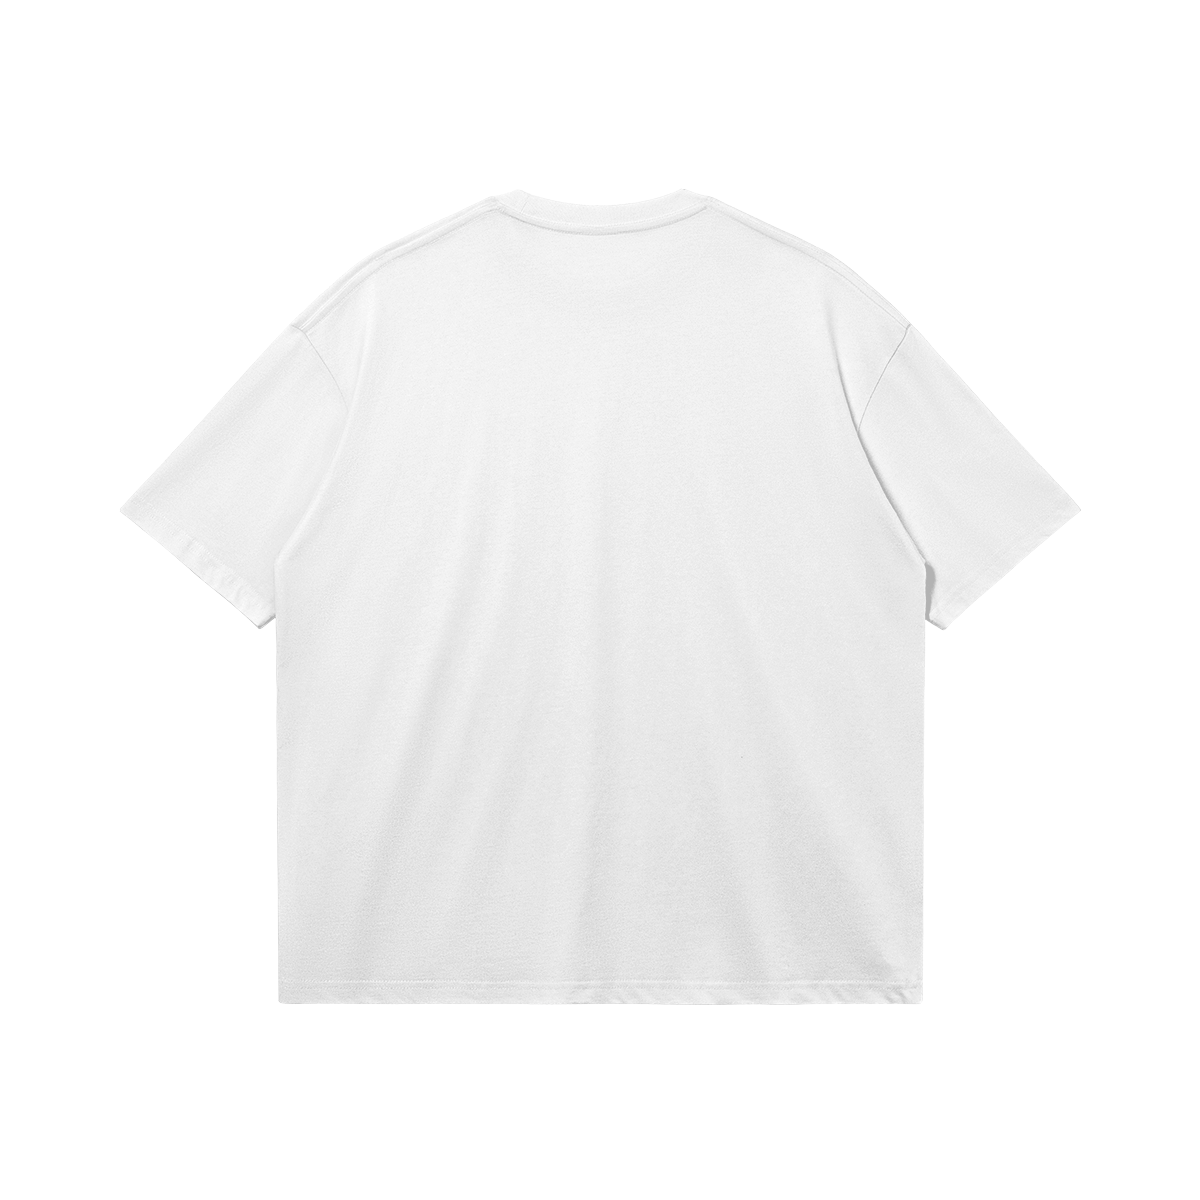 Scrutiny | Oversized Boxy White T-Shirt